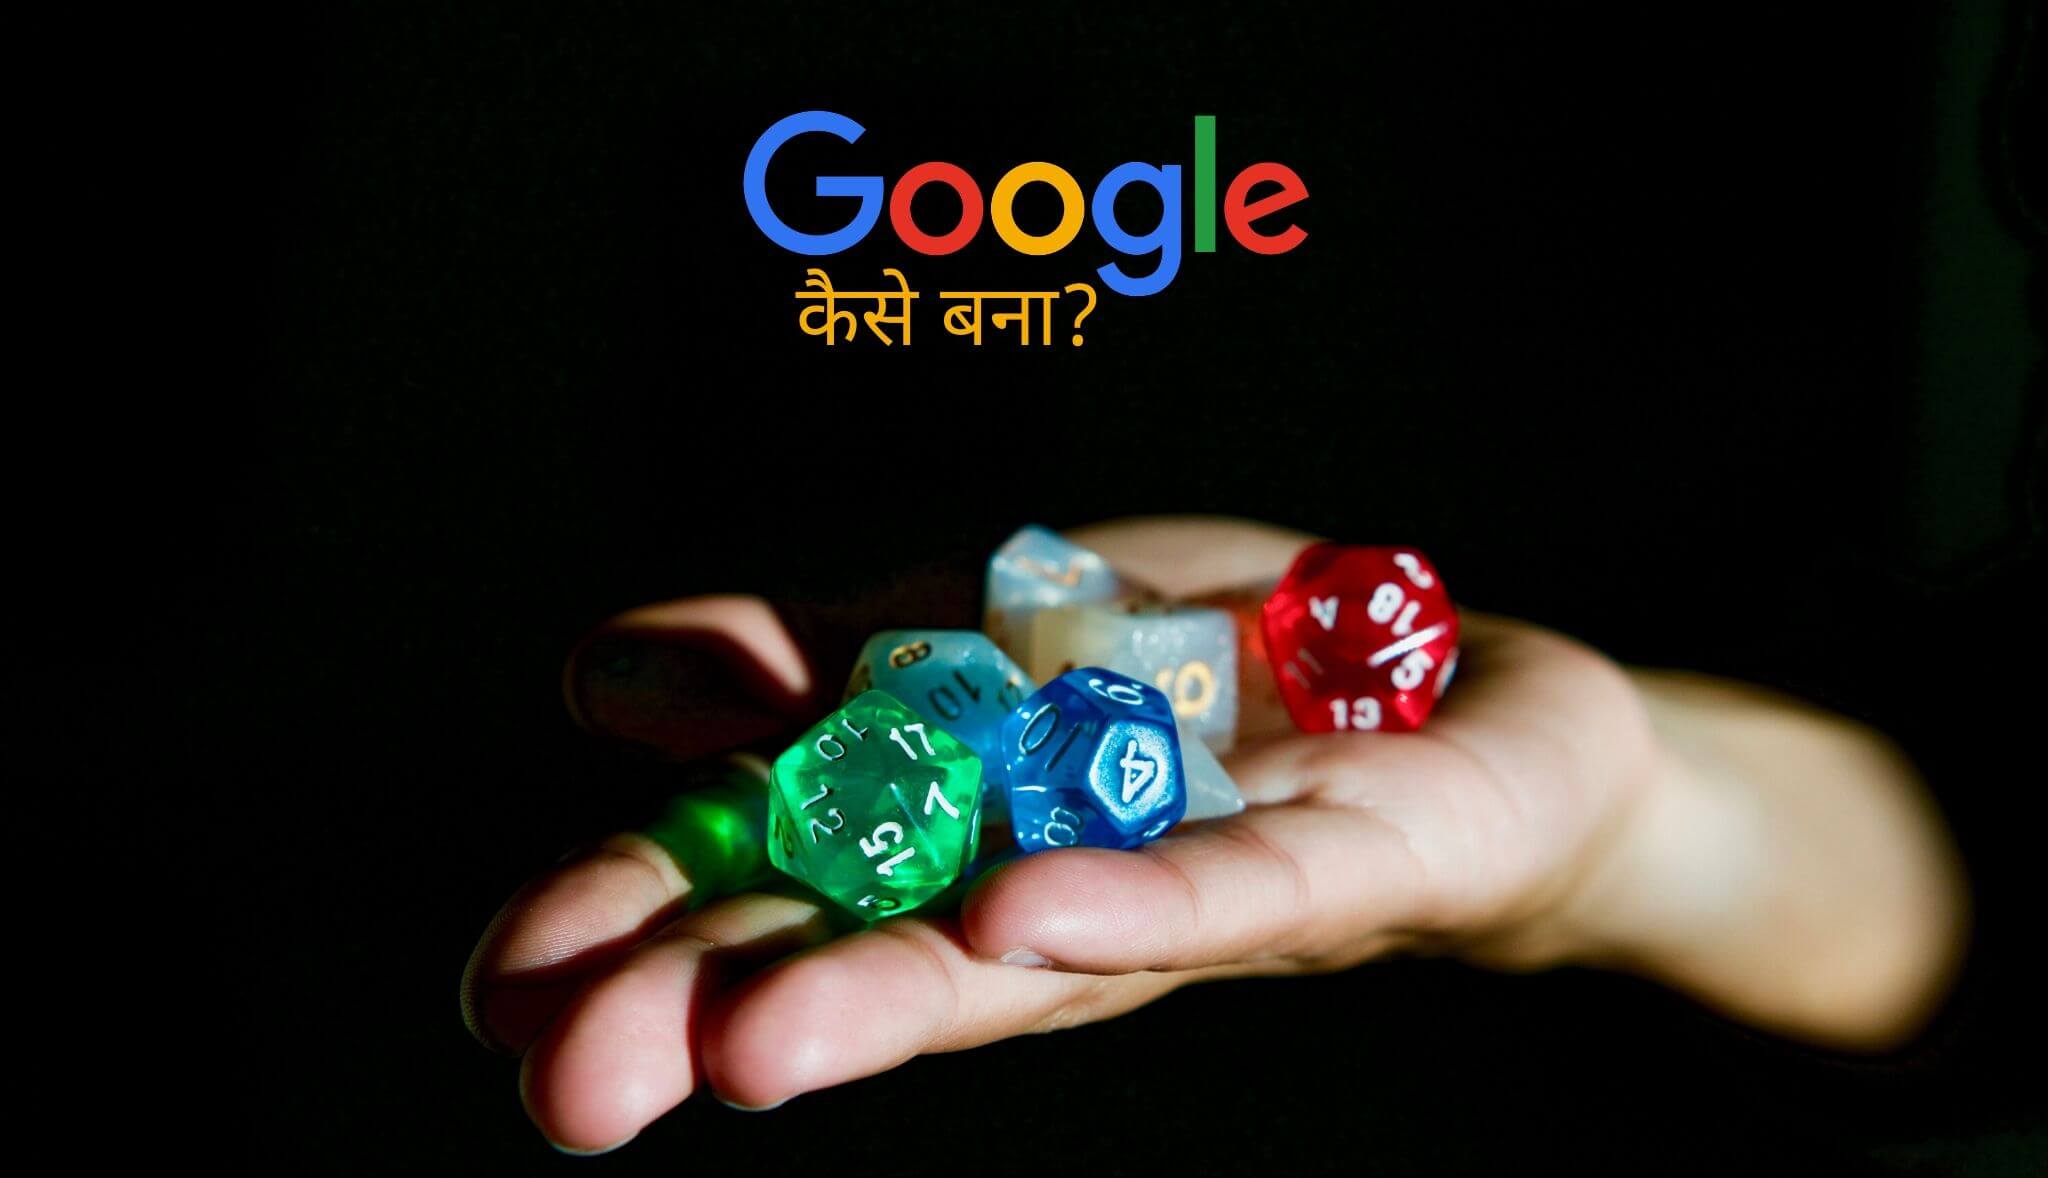 googolplex and google